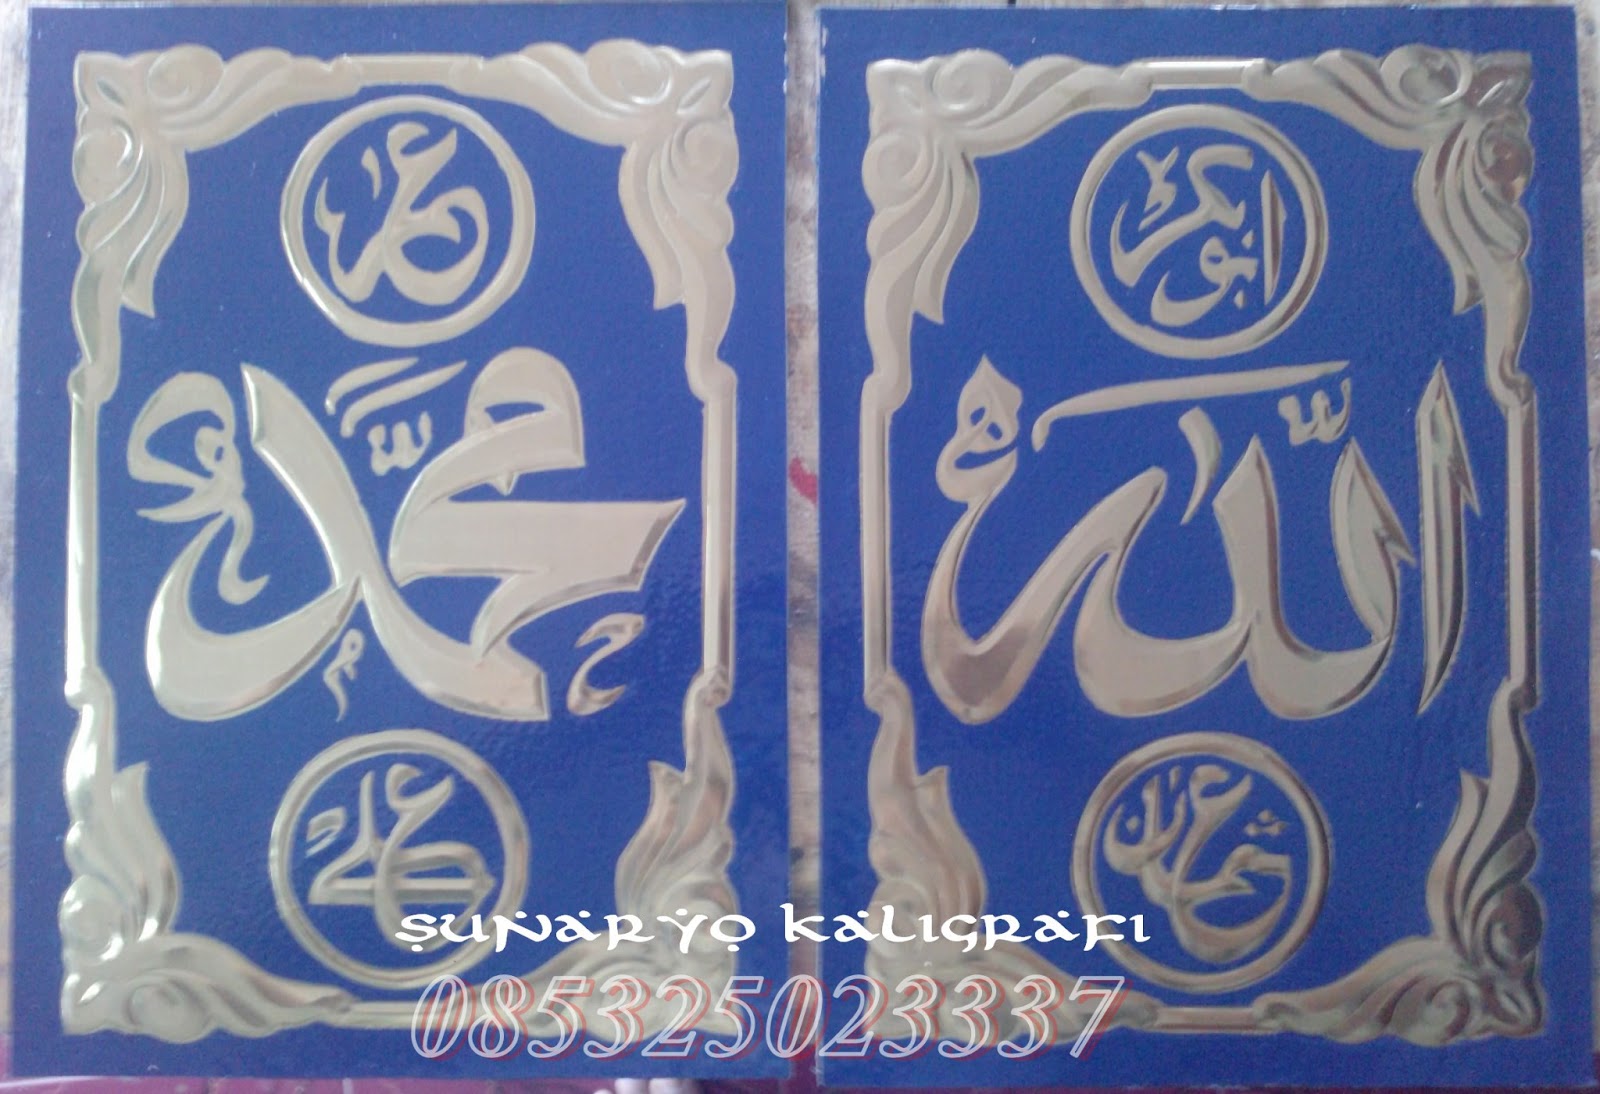 Kaligrafi ALLAH-MUHAMMAD (am)